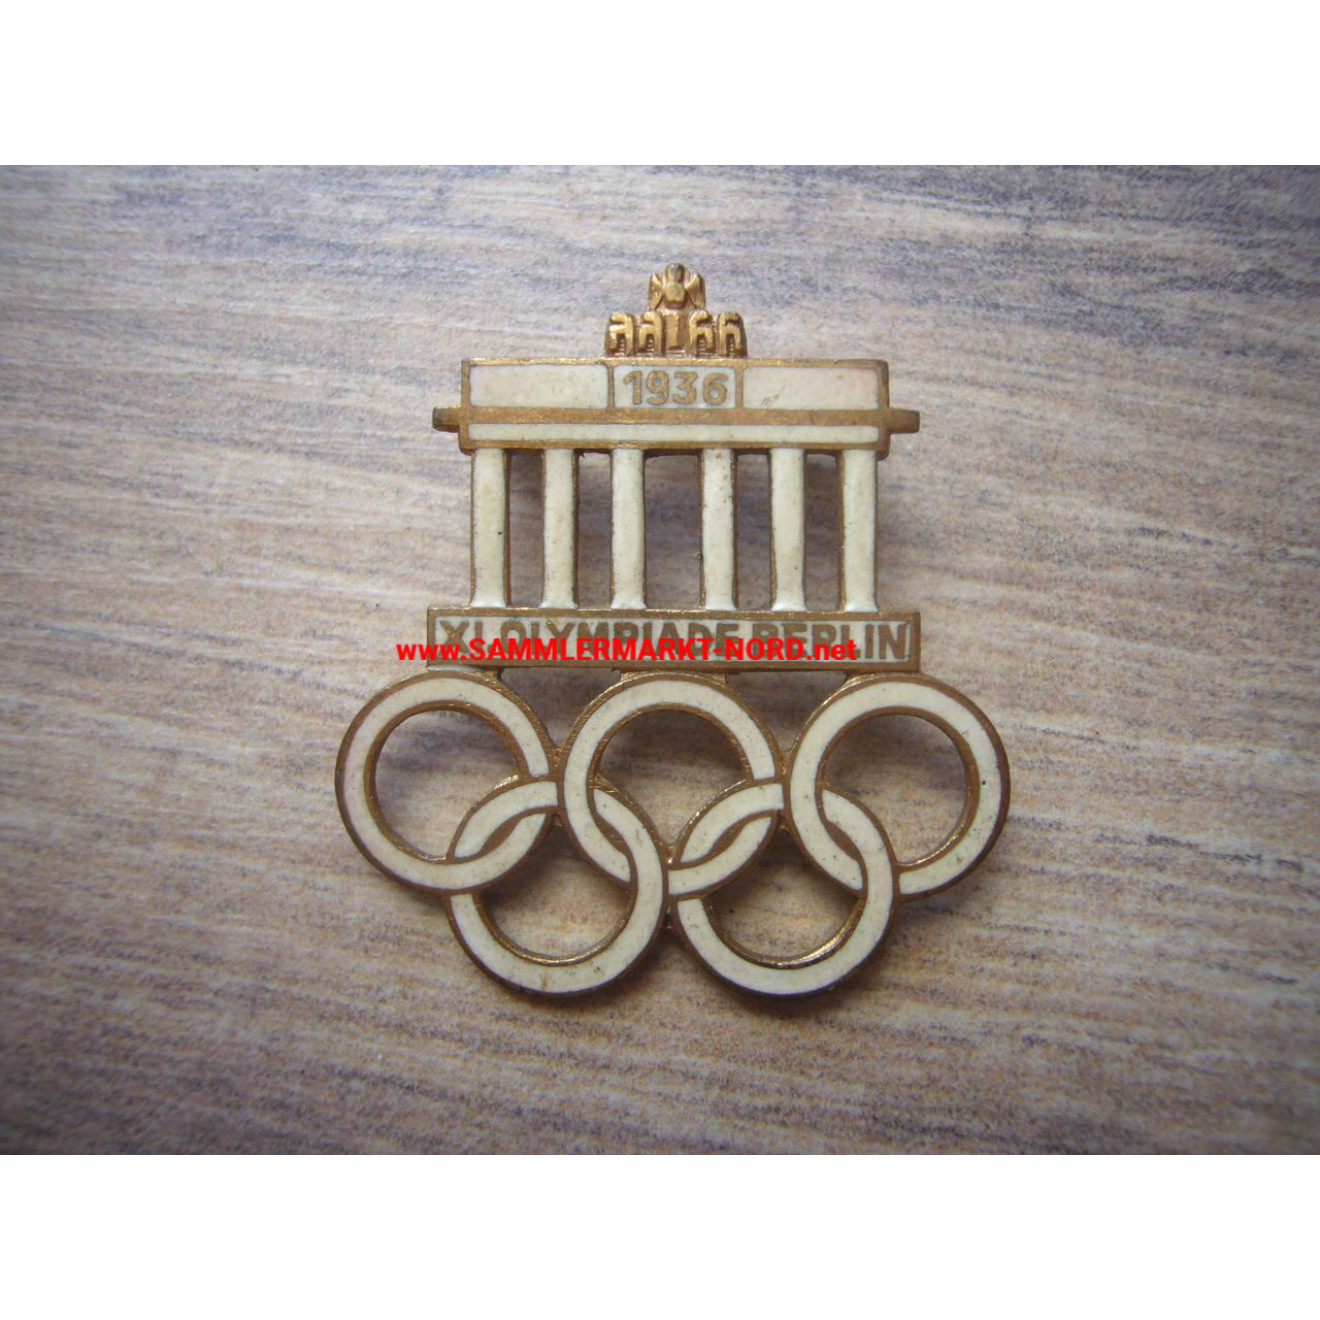 XI. Olympic Games, Berlin 1936 - badge for visitors